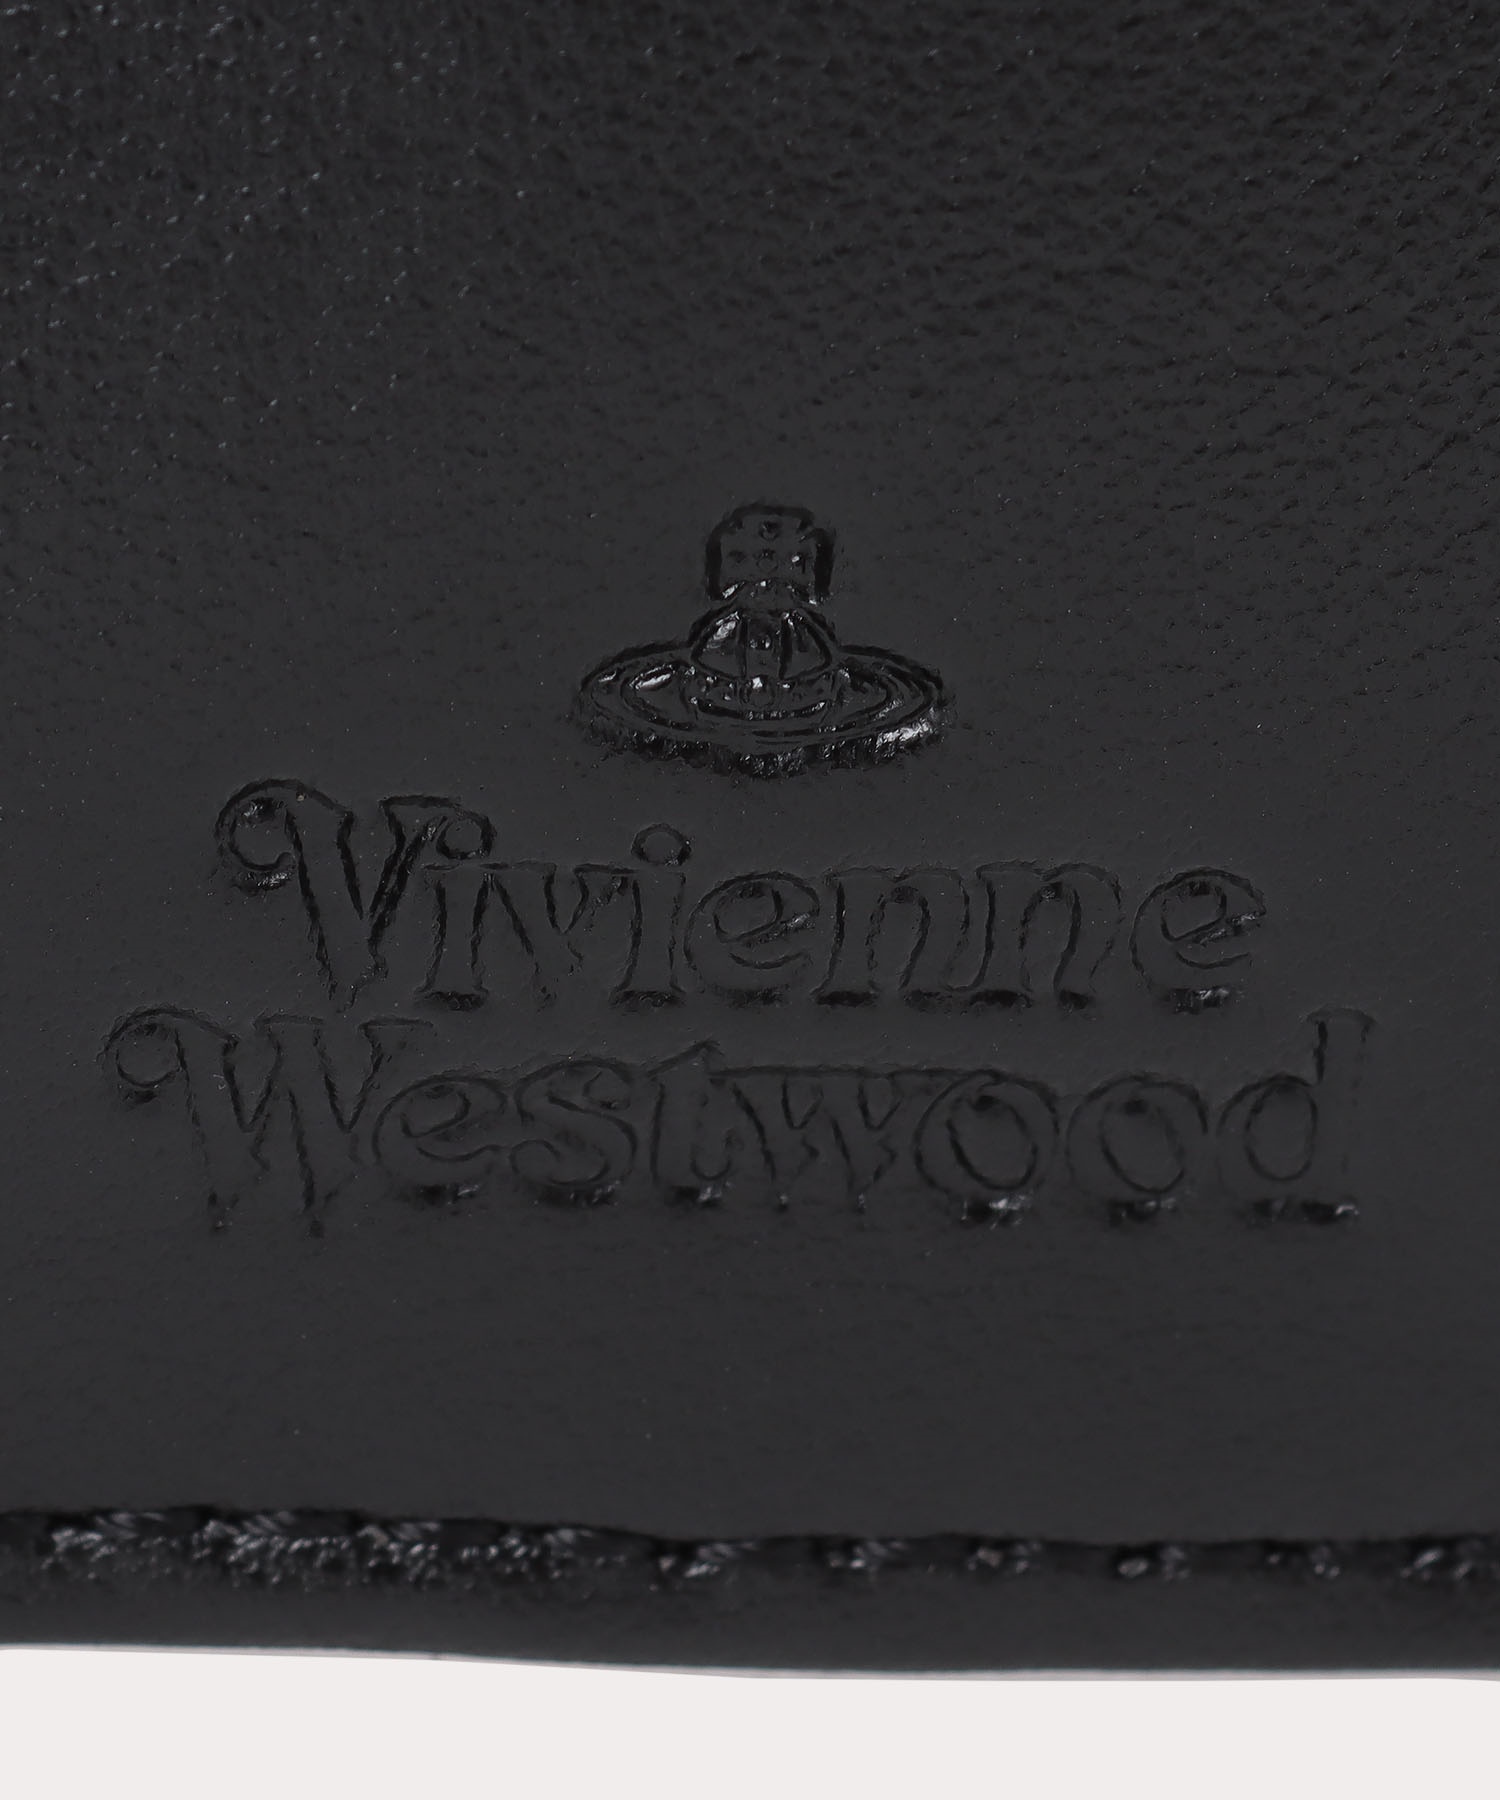 Vivienne Westwood サフィアーノ エンベロープ 三つ折り財布